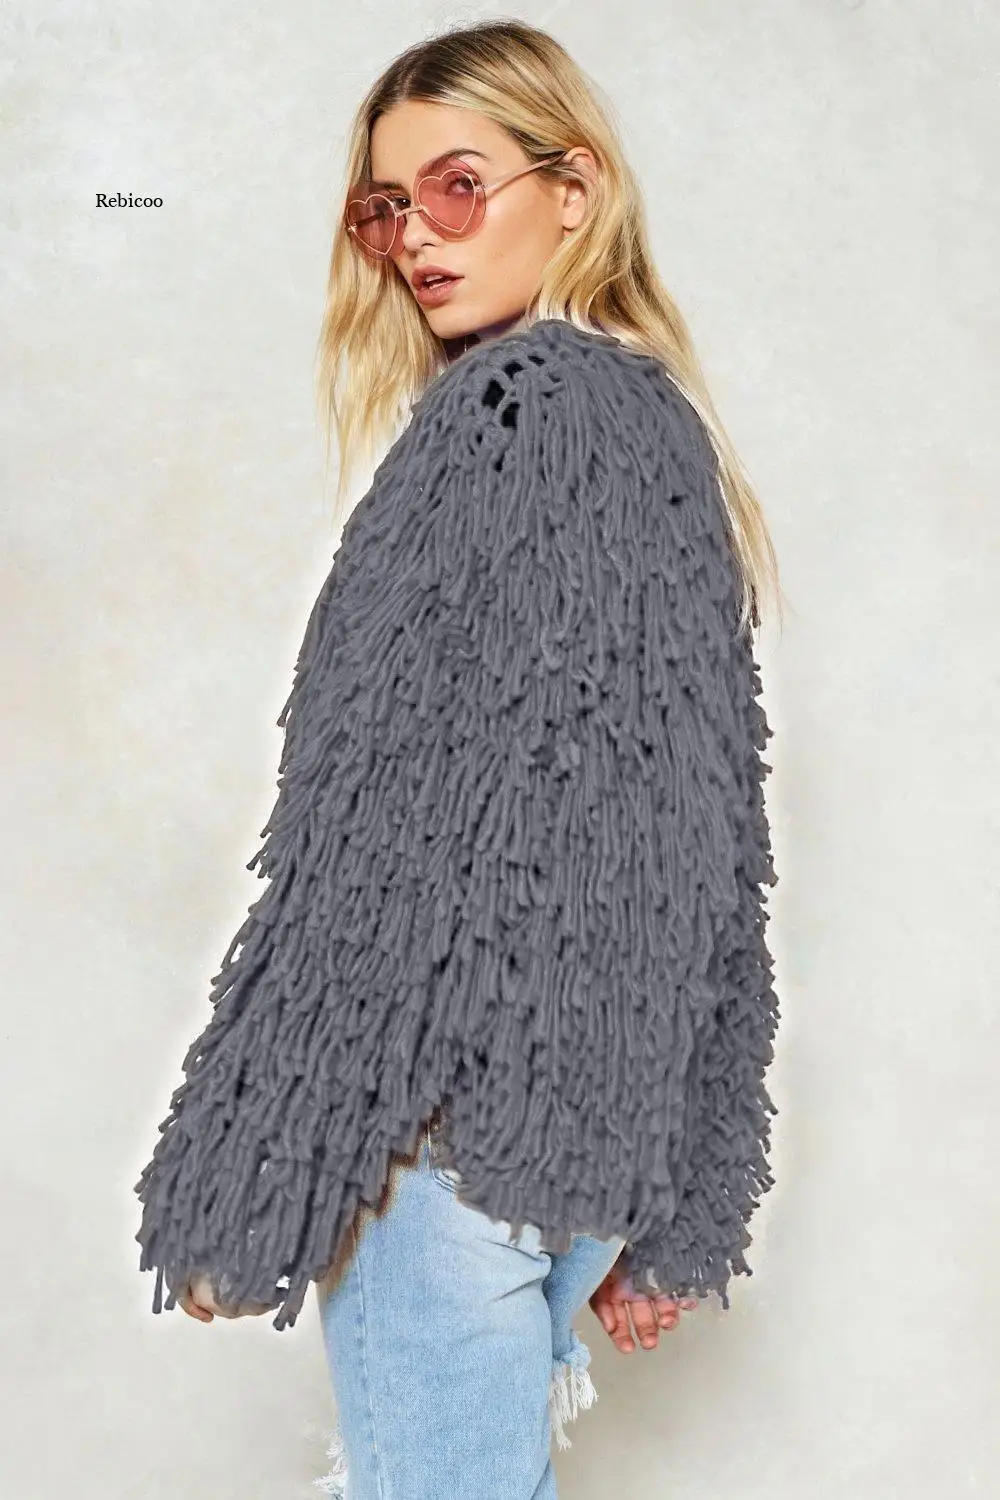 Women Sweater Coat Coarse Yarn Knitted Wool Tassels Crocheted Fuzzy Women Cardigan Fringed Hooked Jacket Pullovers Ol Tops New images - 6